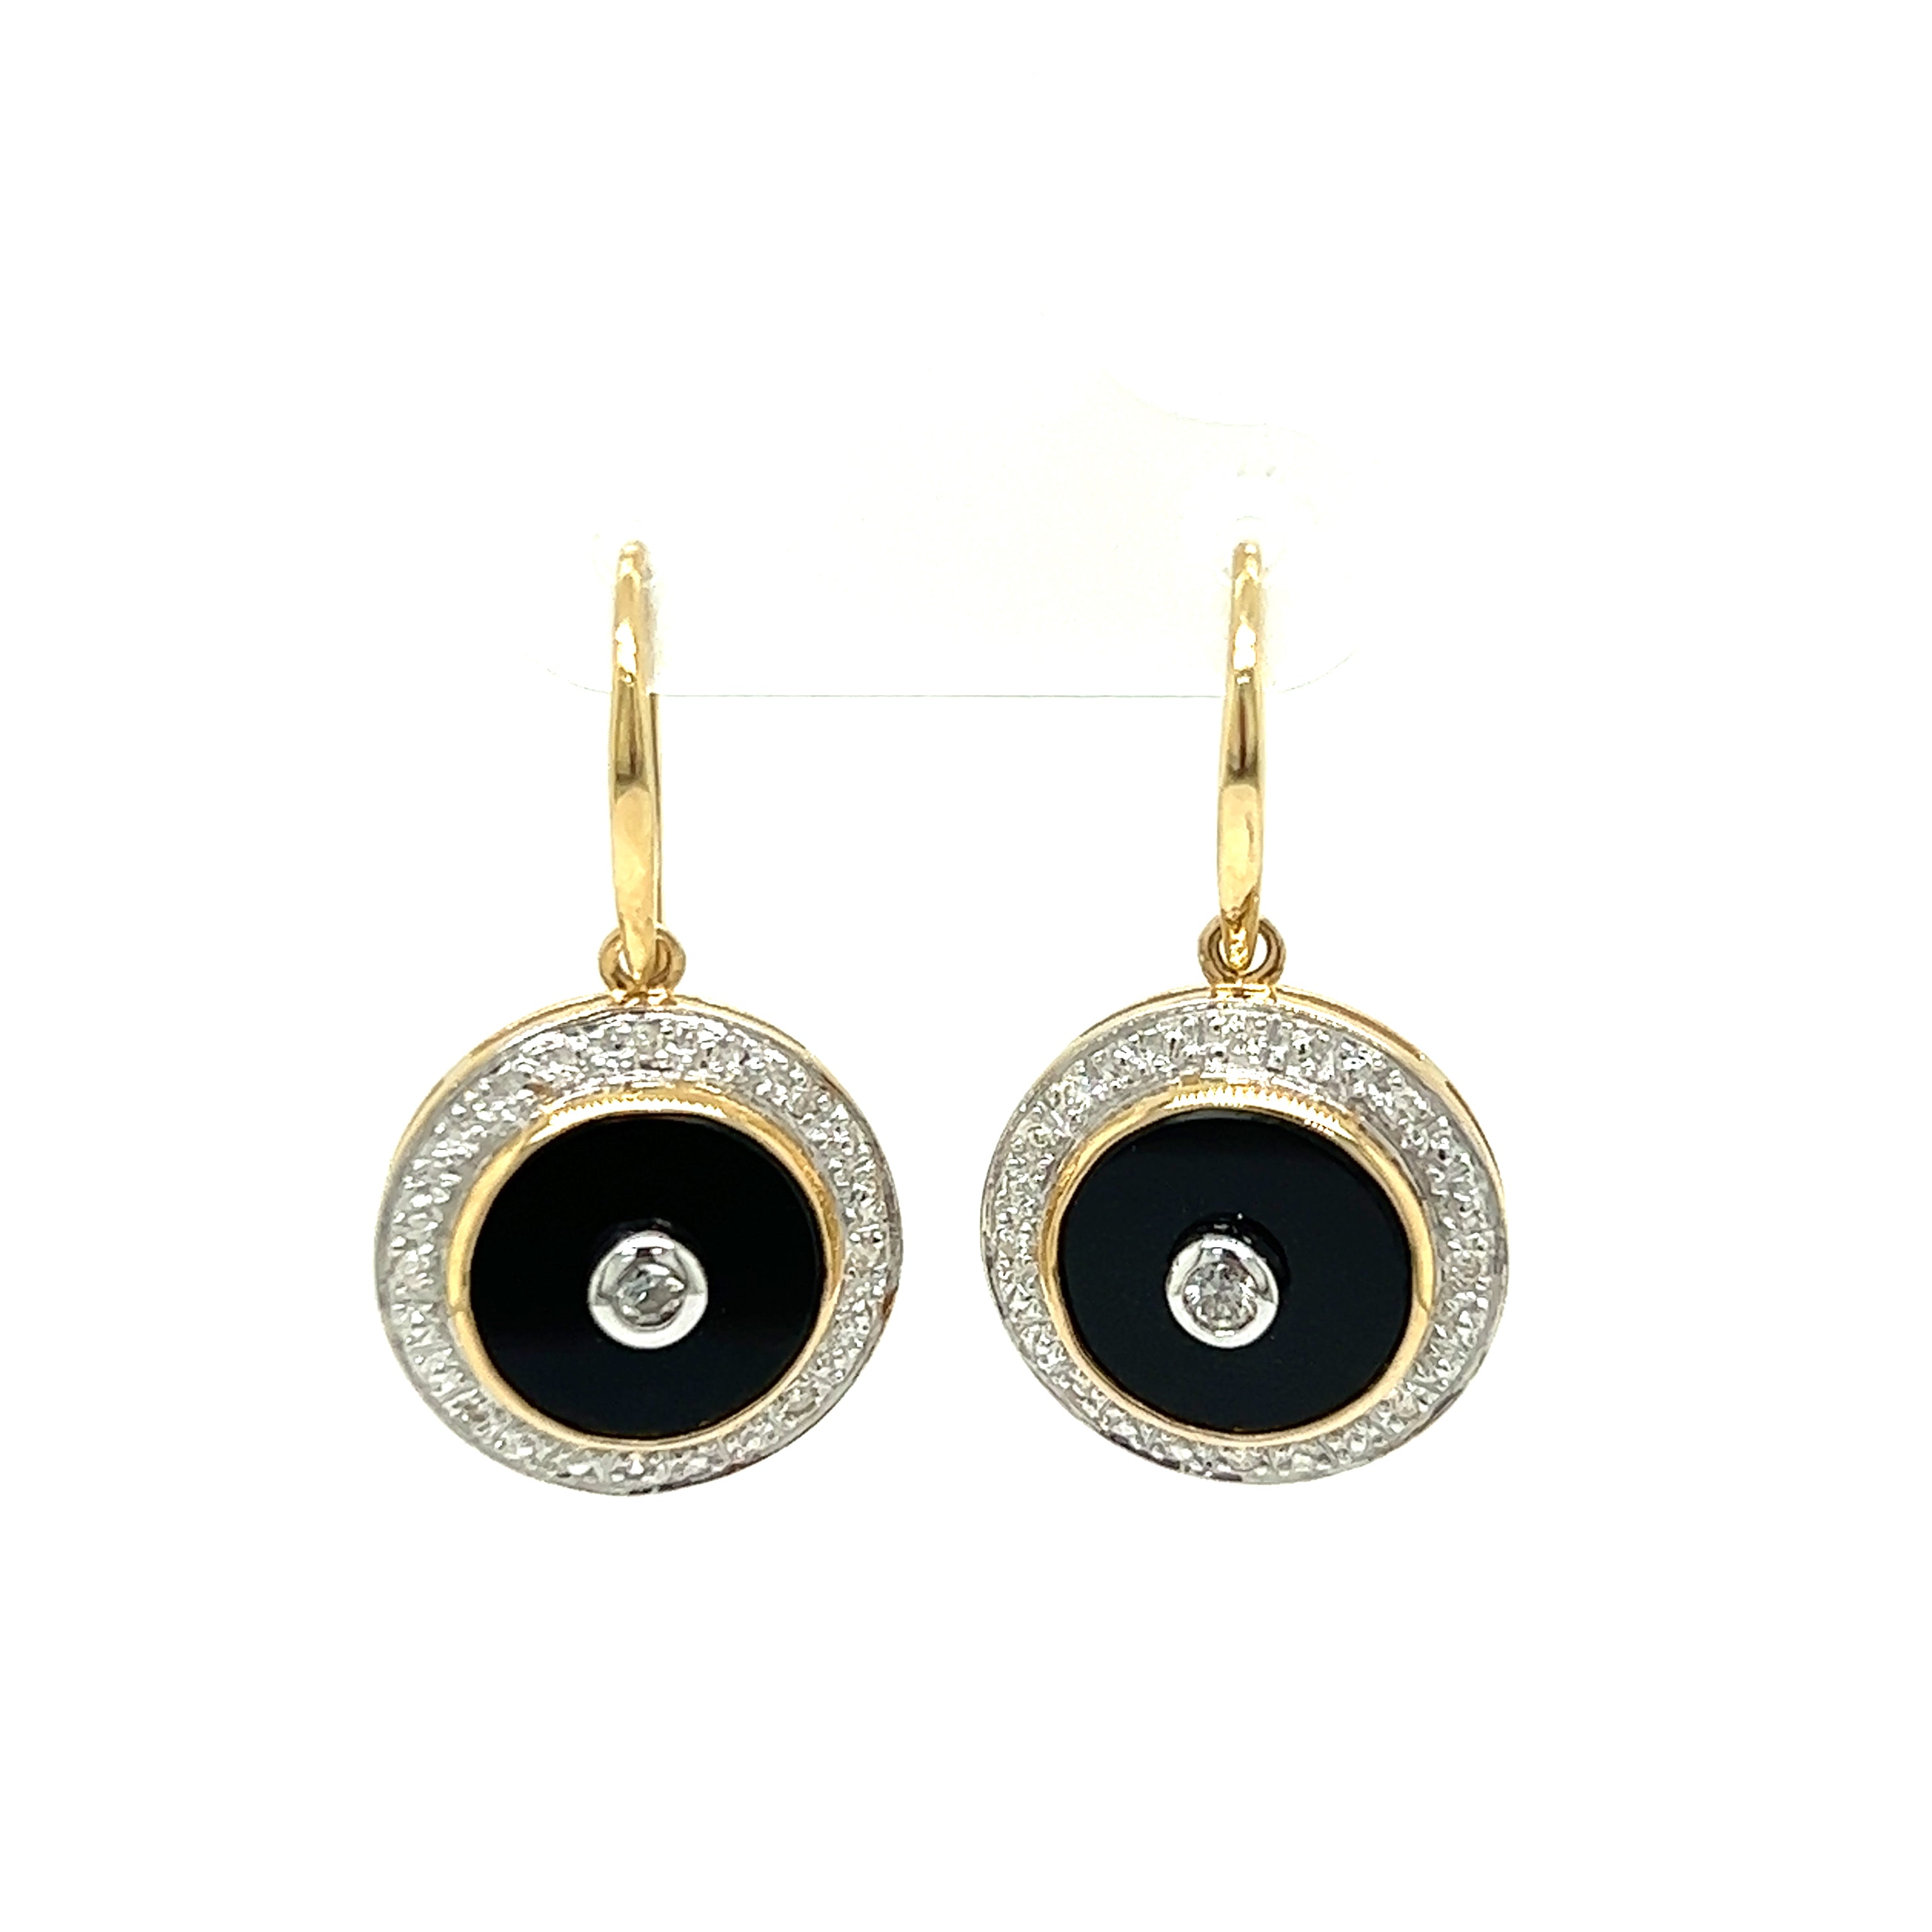 9ct yellow gold onyx and diamond earrings